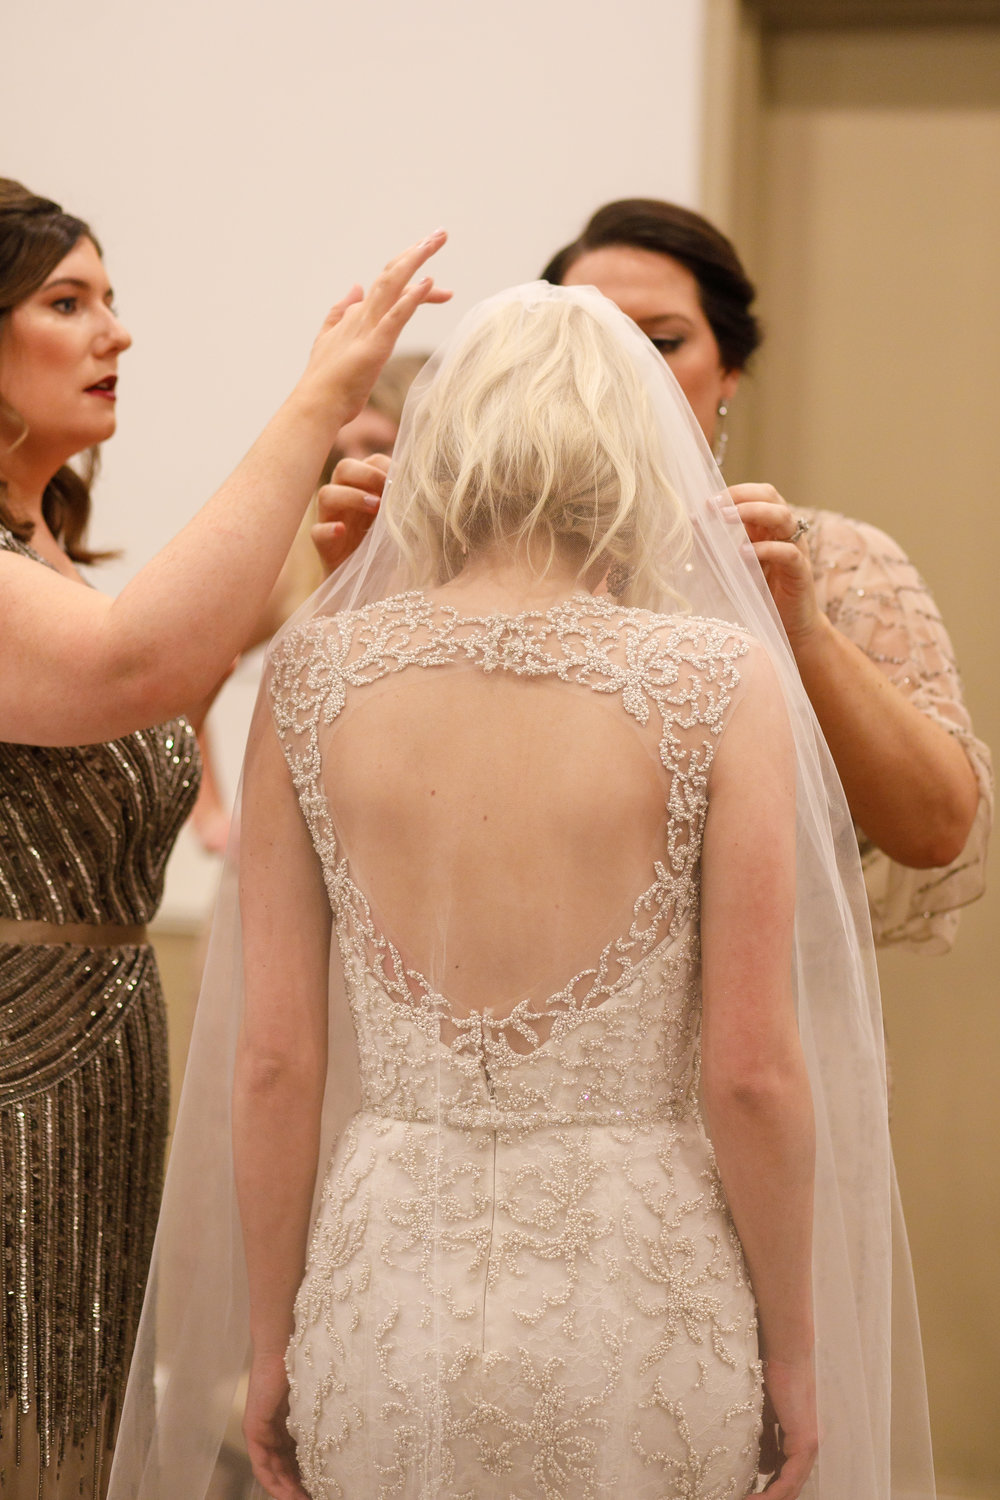 A Glamorous New Year's Eve Black Tie Wedding - Diana Lott Photography -- Wedding Blog-The Overwhelmed Bride